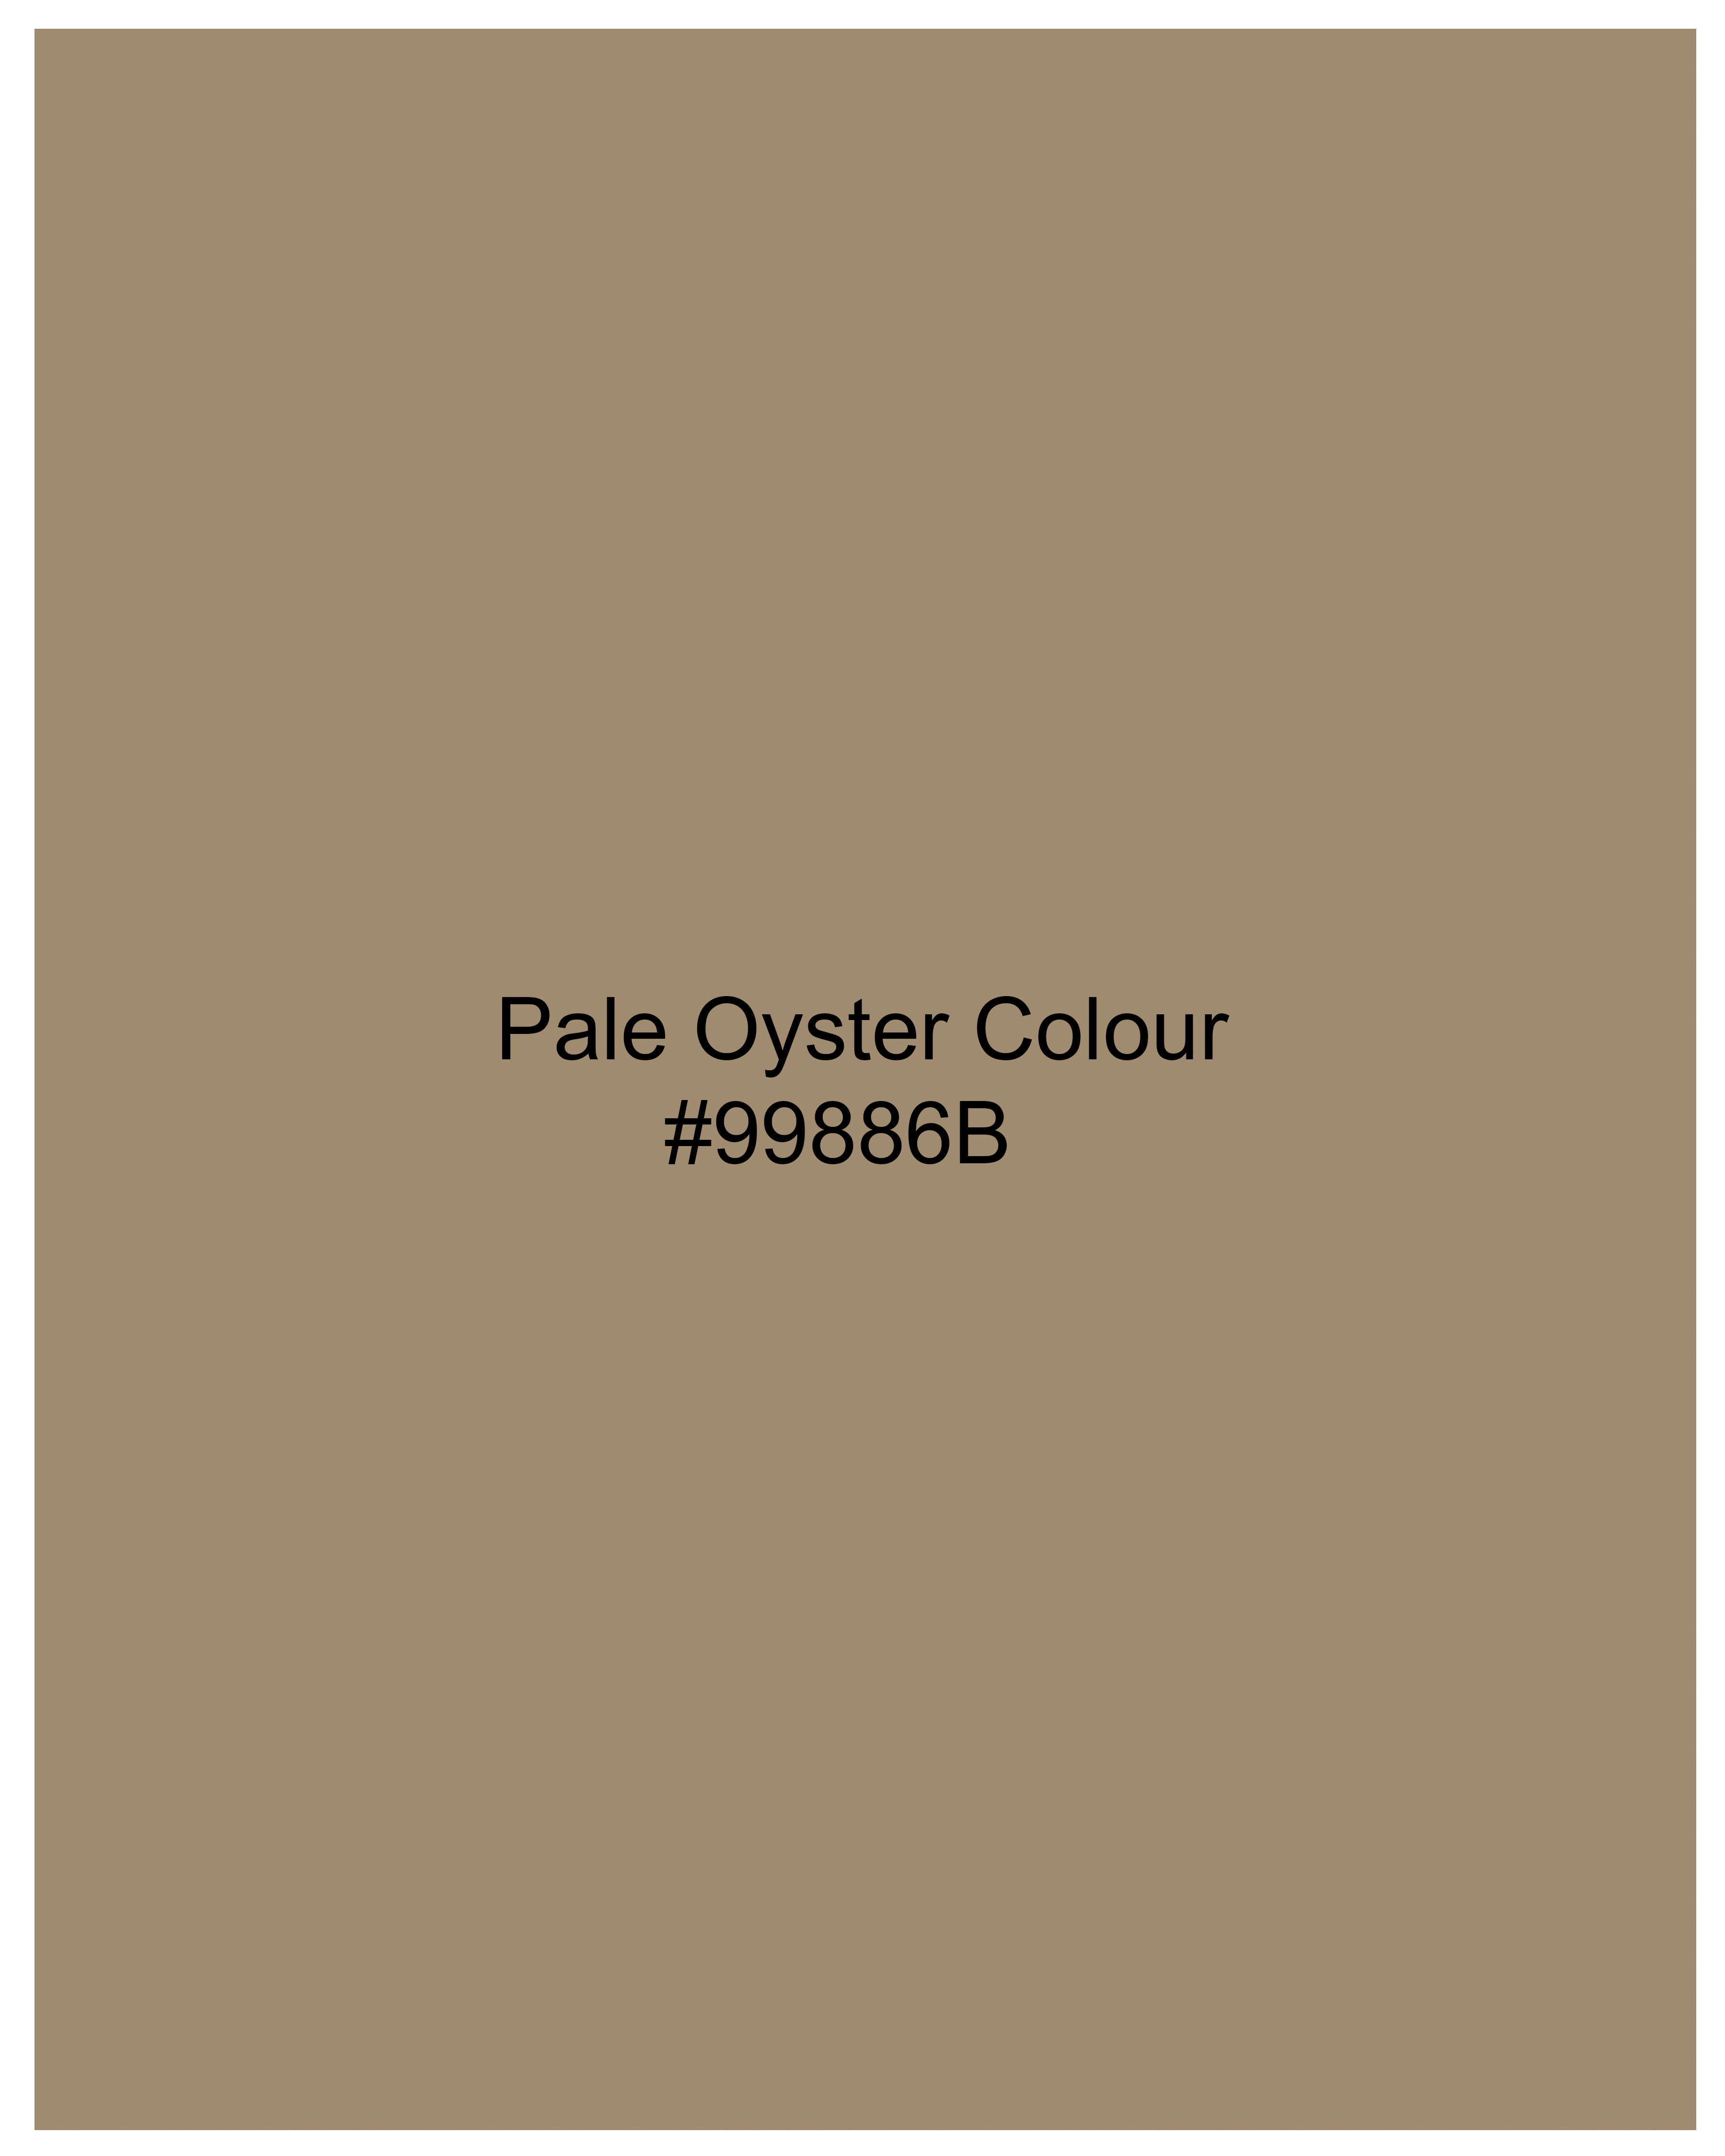 Pale Oyster Brown Premium Cotton Bomber Jacket with Shorts Combo TS631-SR173-38, TS631-SR173-39, TS631-SR173-40, TS631-SR173-42, TS631-SR173-44, TS631-SR173-46